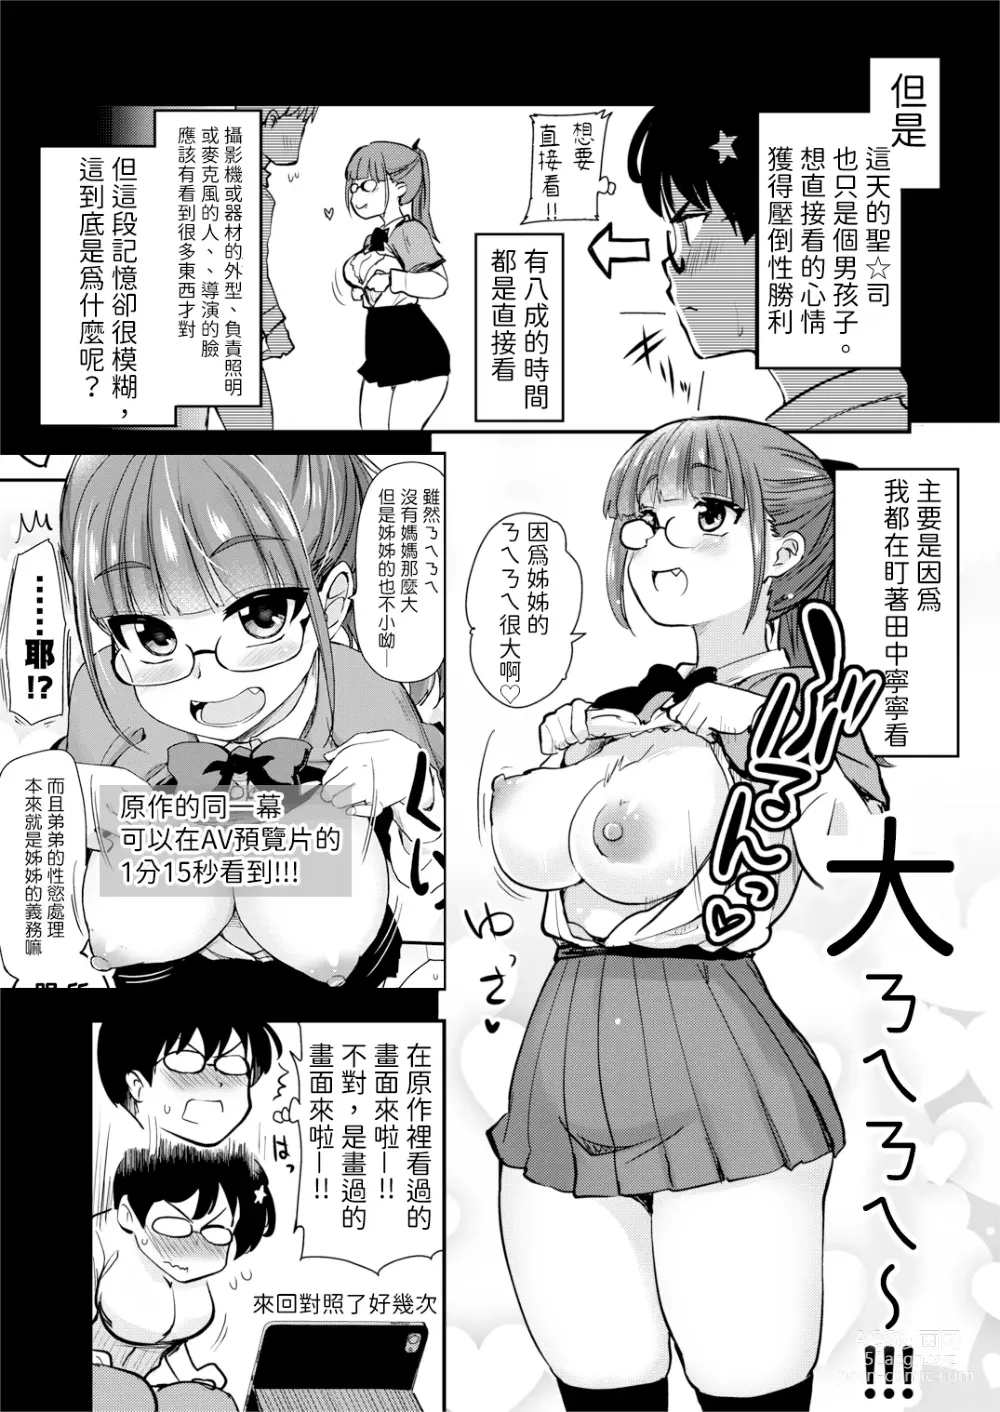 Page 17 of doujinshi 我畫的色情漫畫被AV真人化了!? 因為機會難得所以去拍攝現場觀摩之後的心得感想